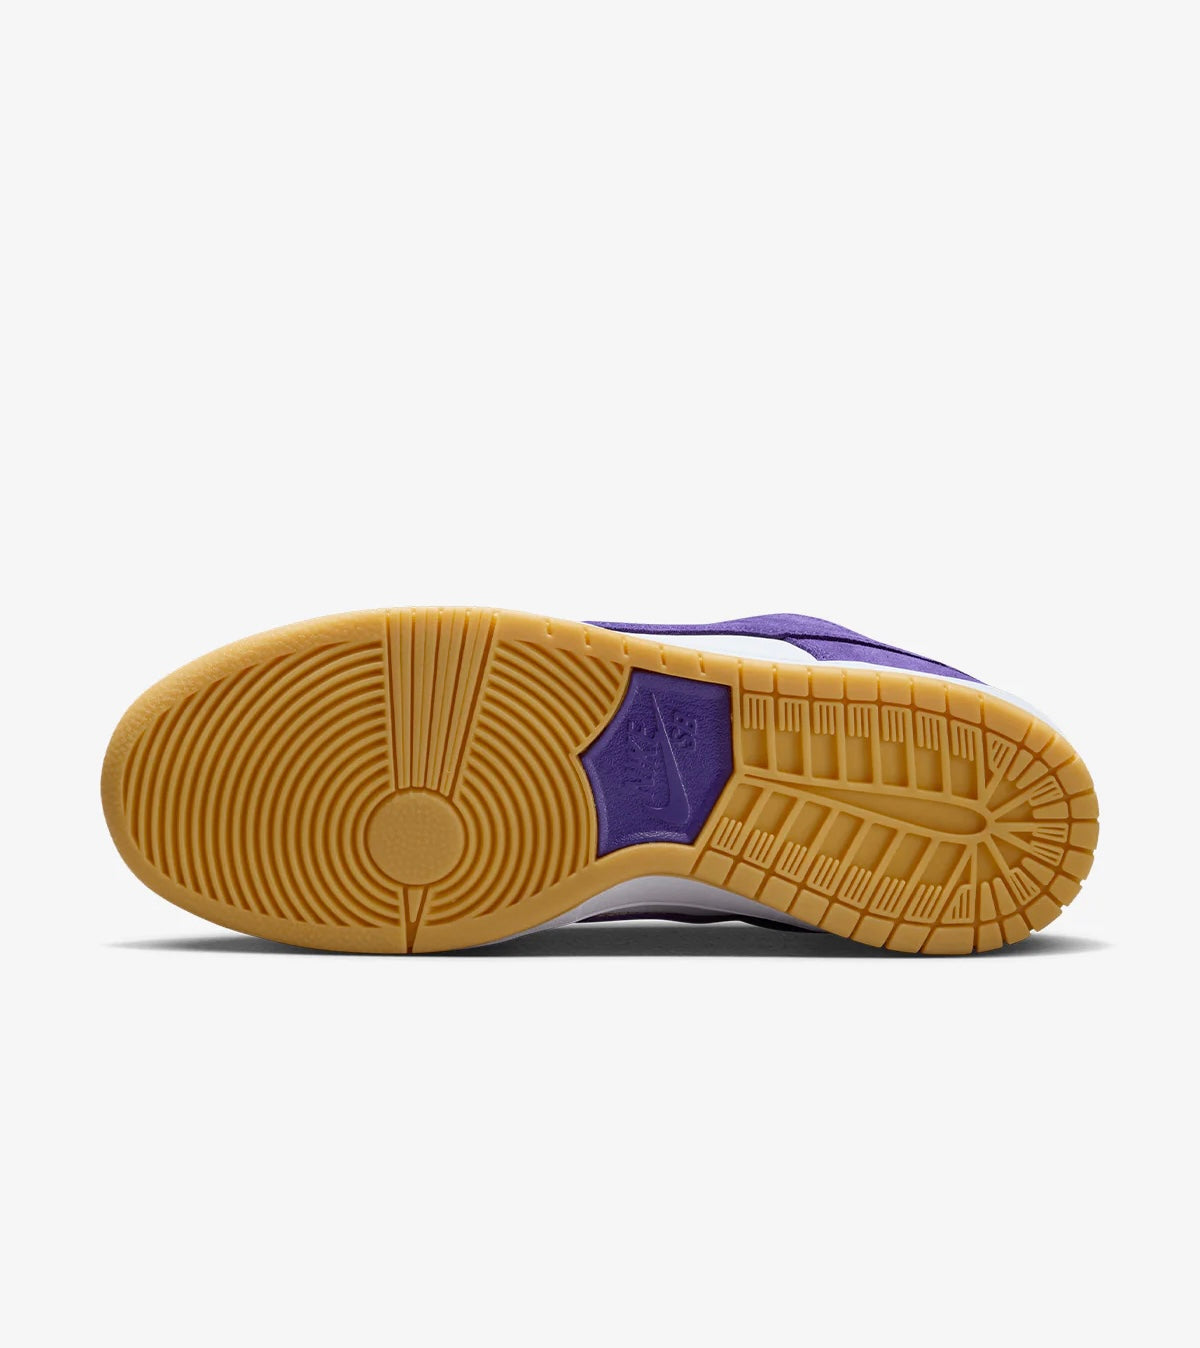 Nike sb court purple